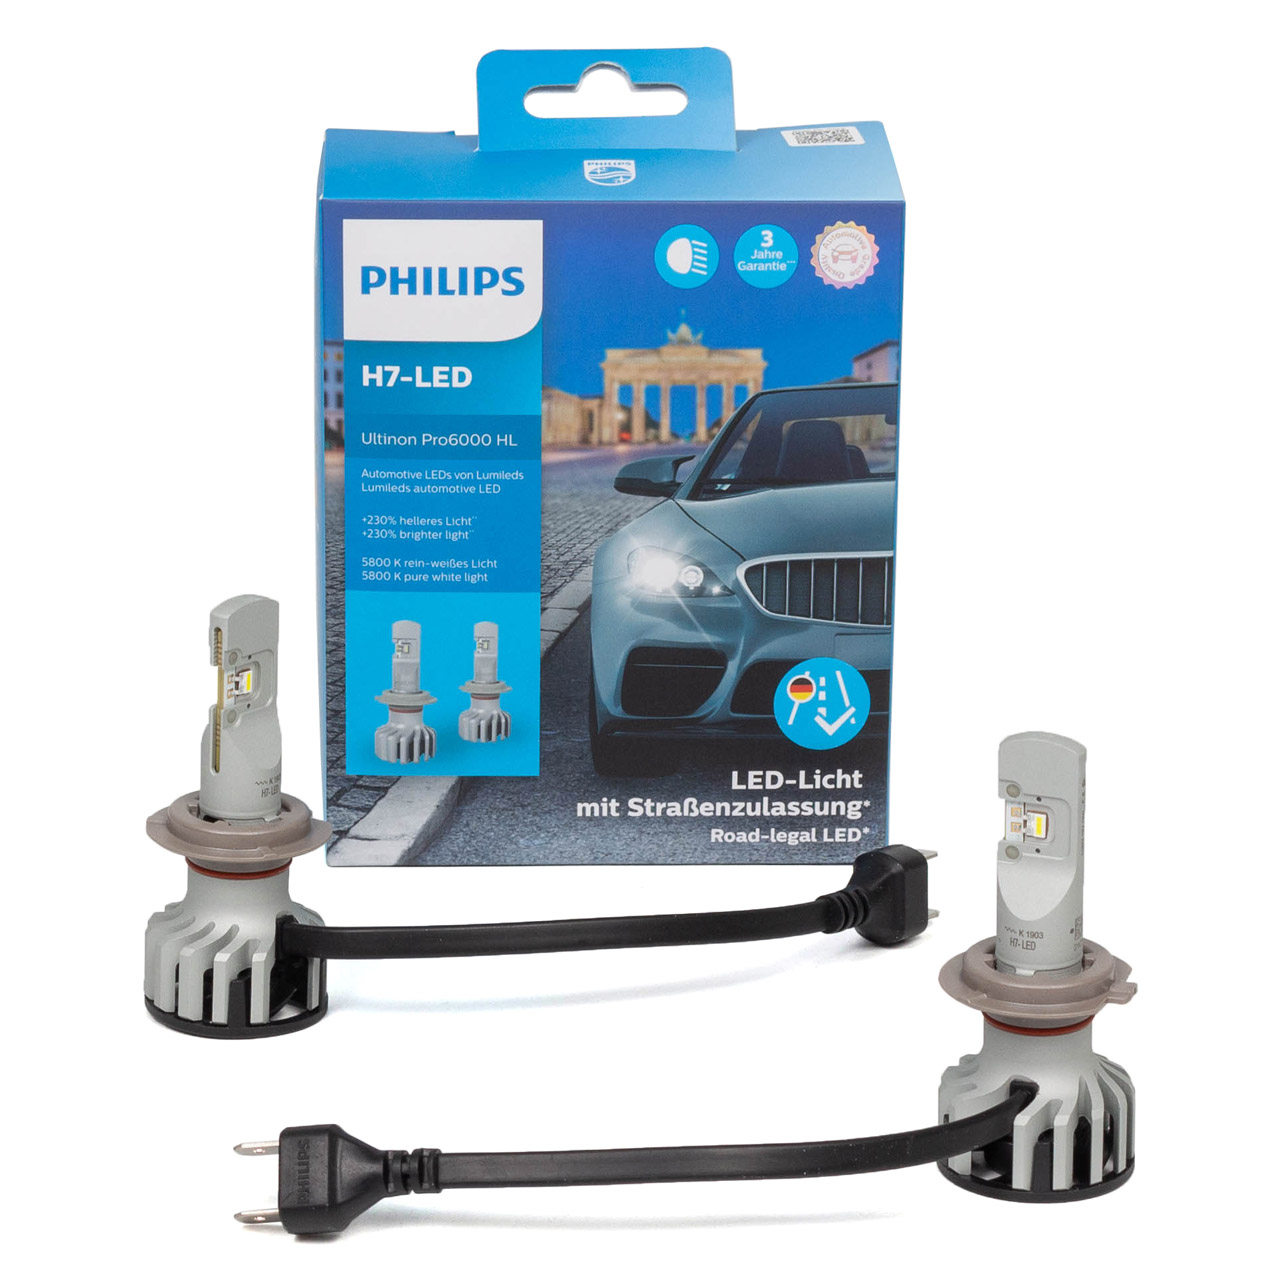 2x PHILIPS Ultinon Pro6000 H7 LED Lampe 11972X2 mit Straßenzulassung 12V +230% 5.800K